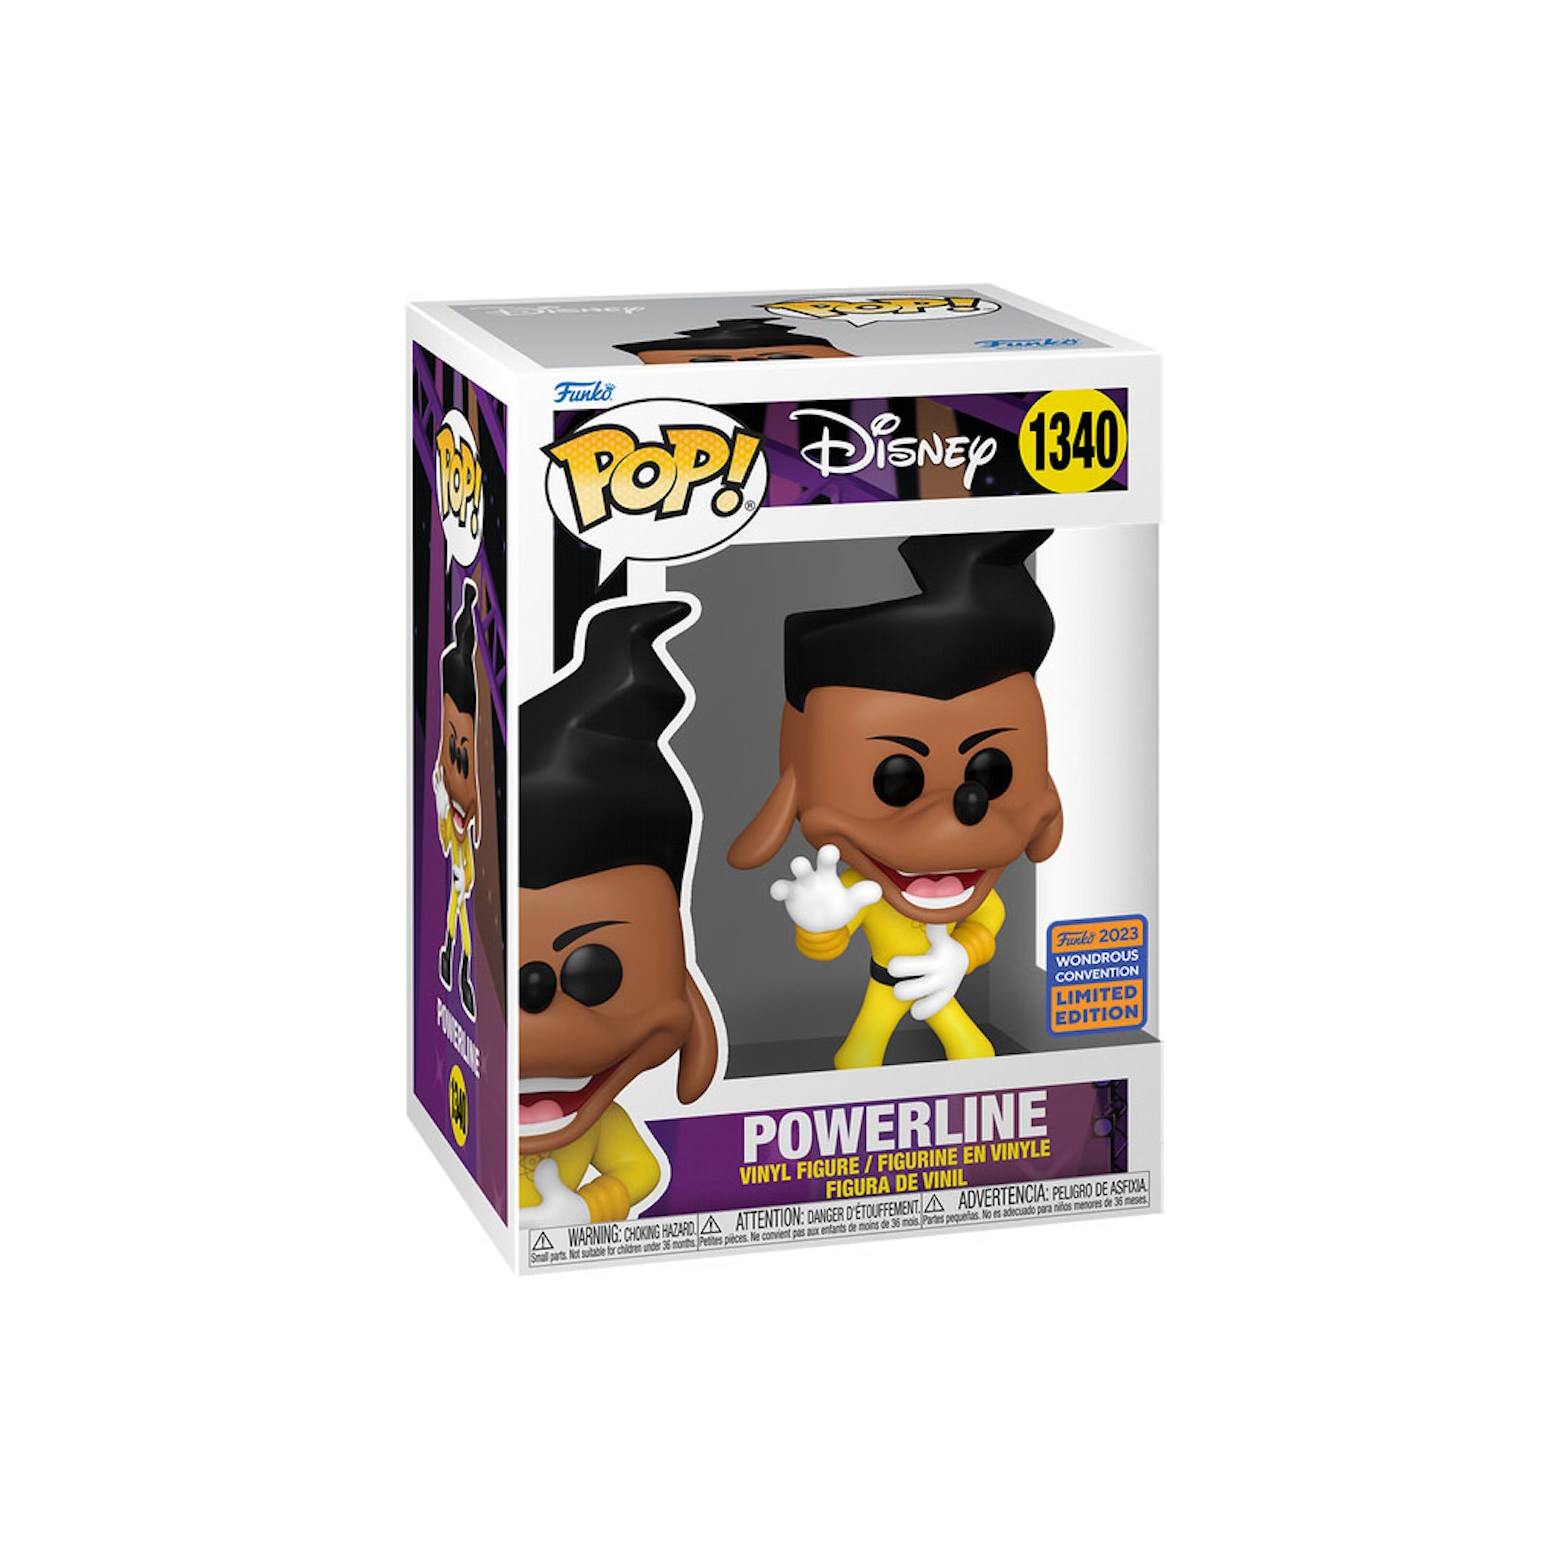 Funko Pop! Disney Powerline 2023 Wondrous Convention Exclusive Figure